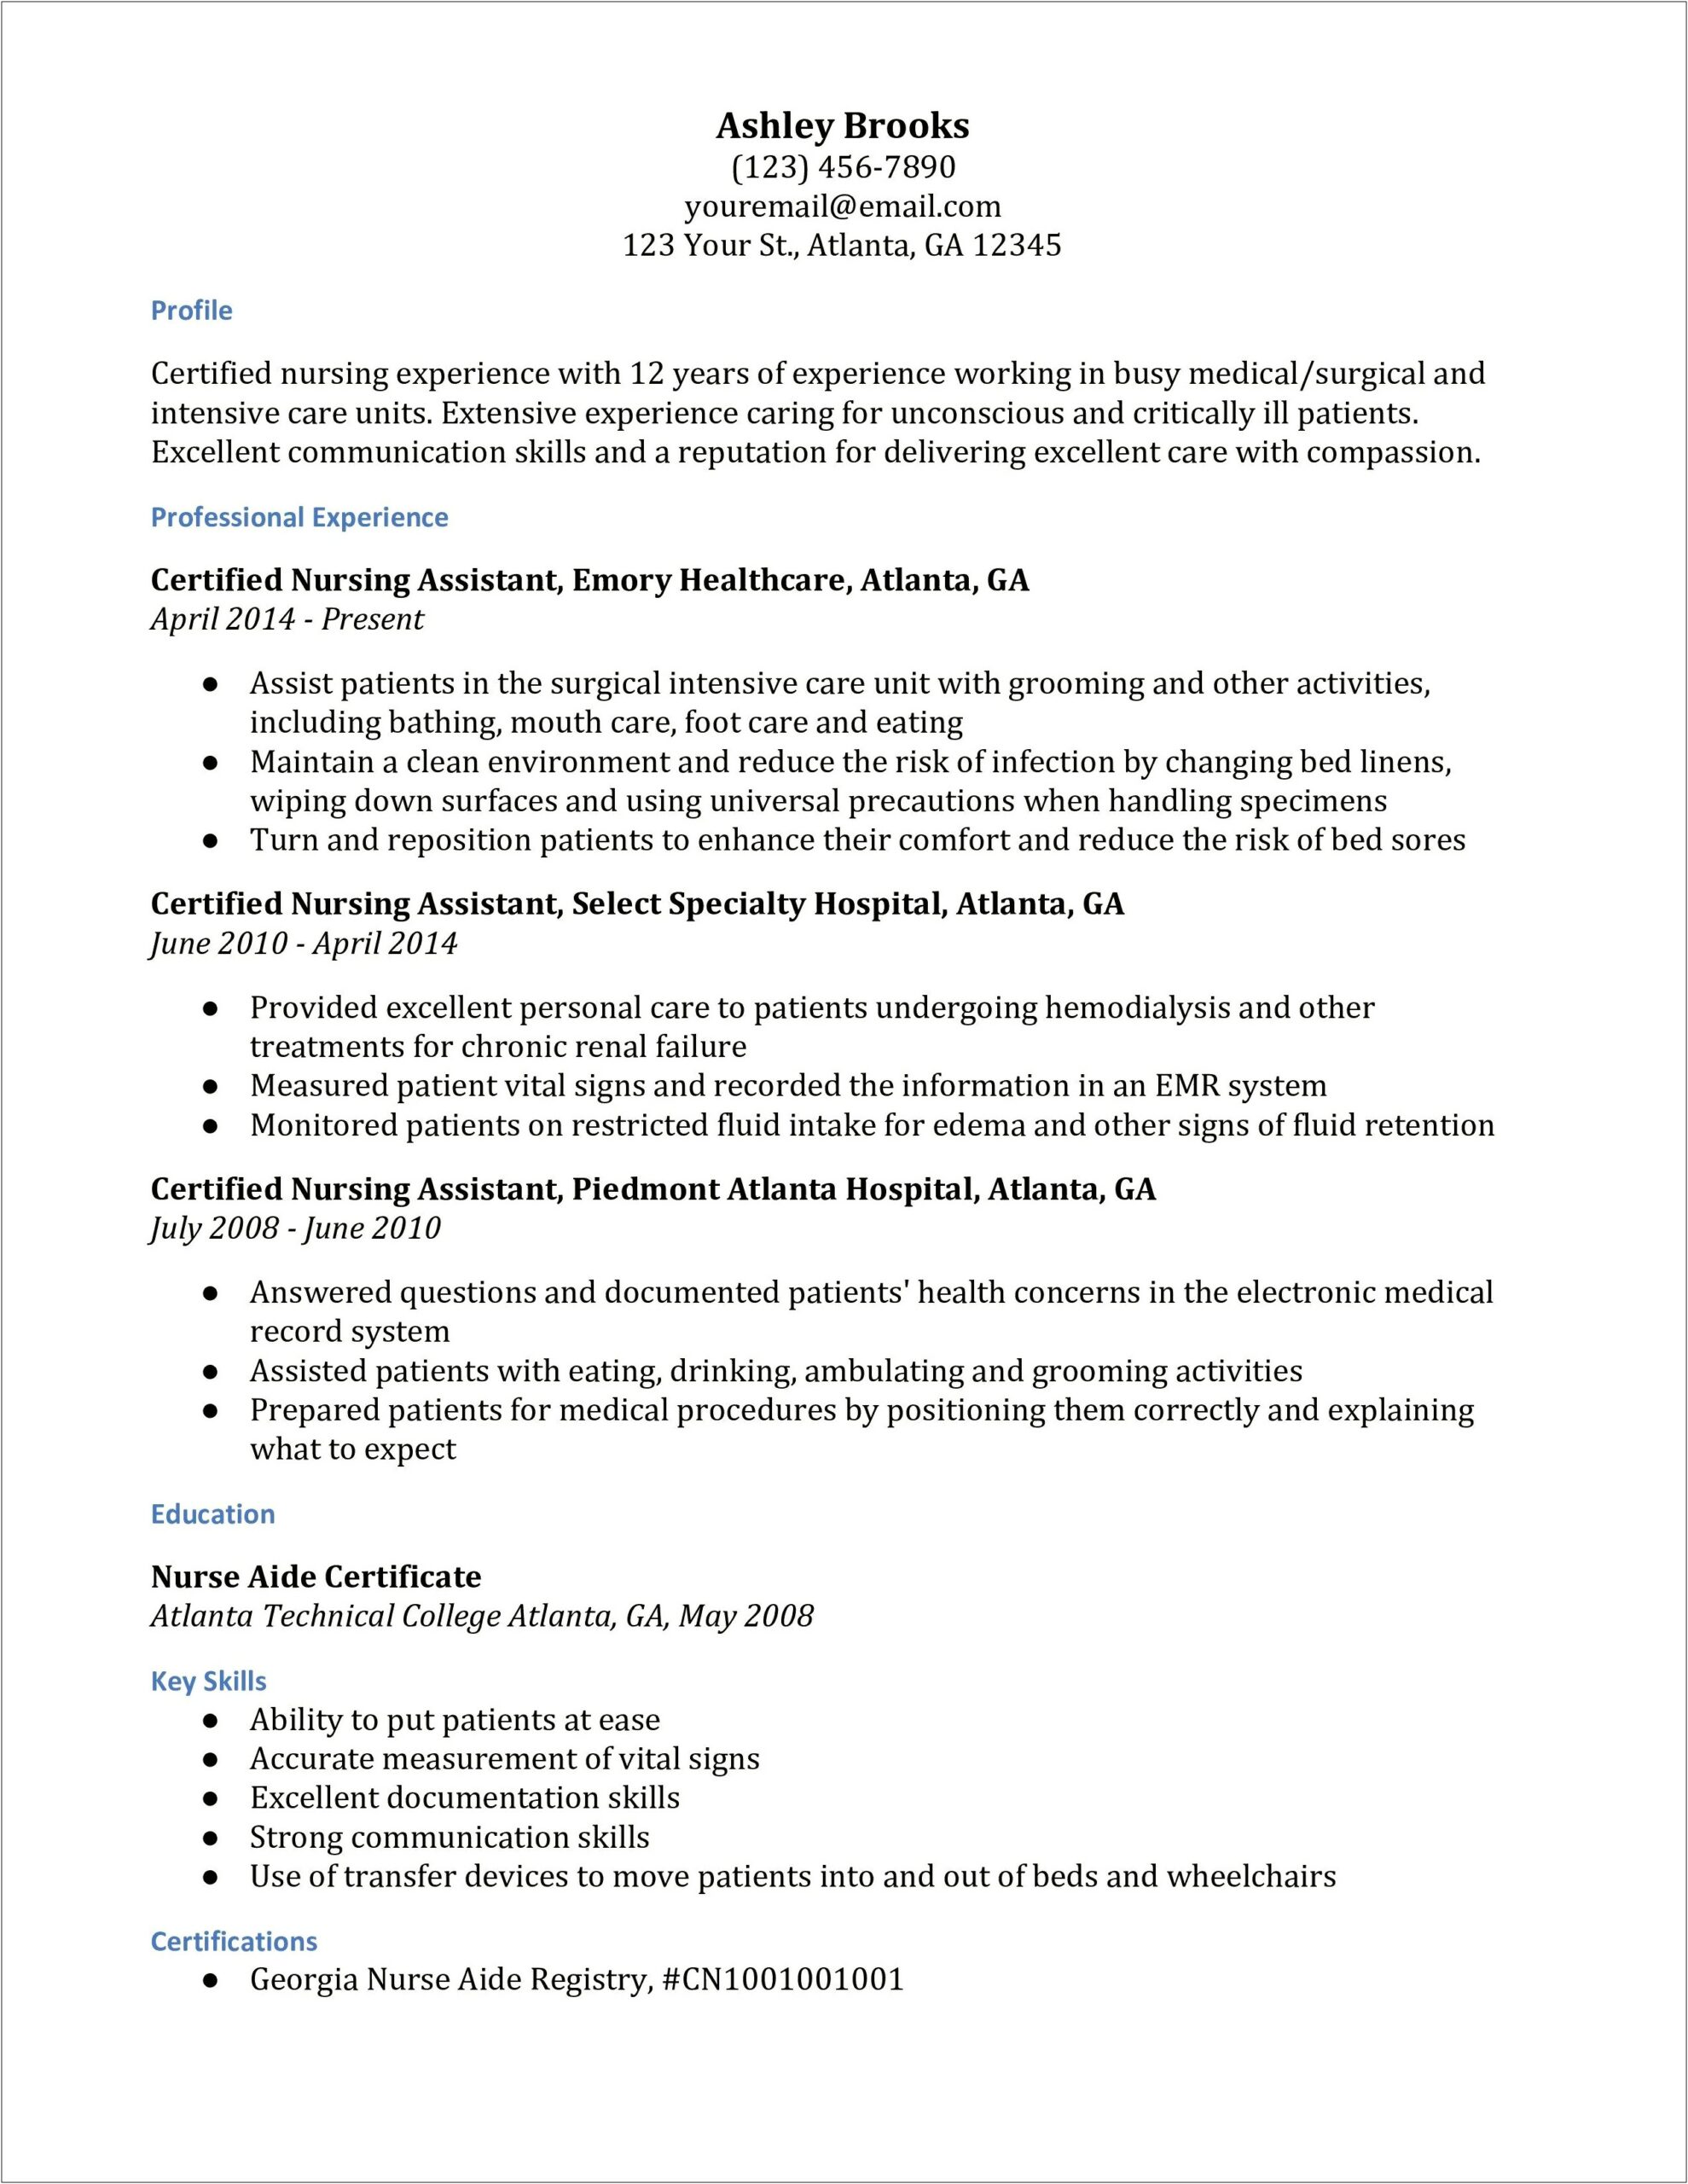 Resume Description For Certified Nursing Assistant